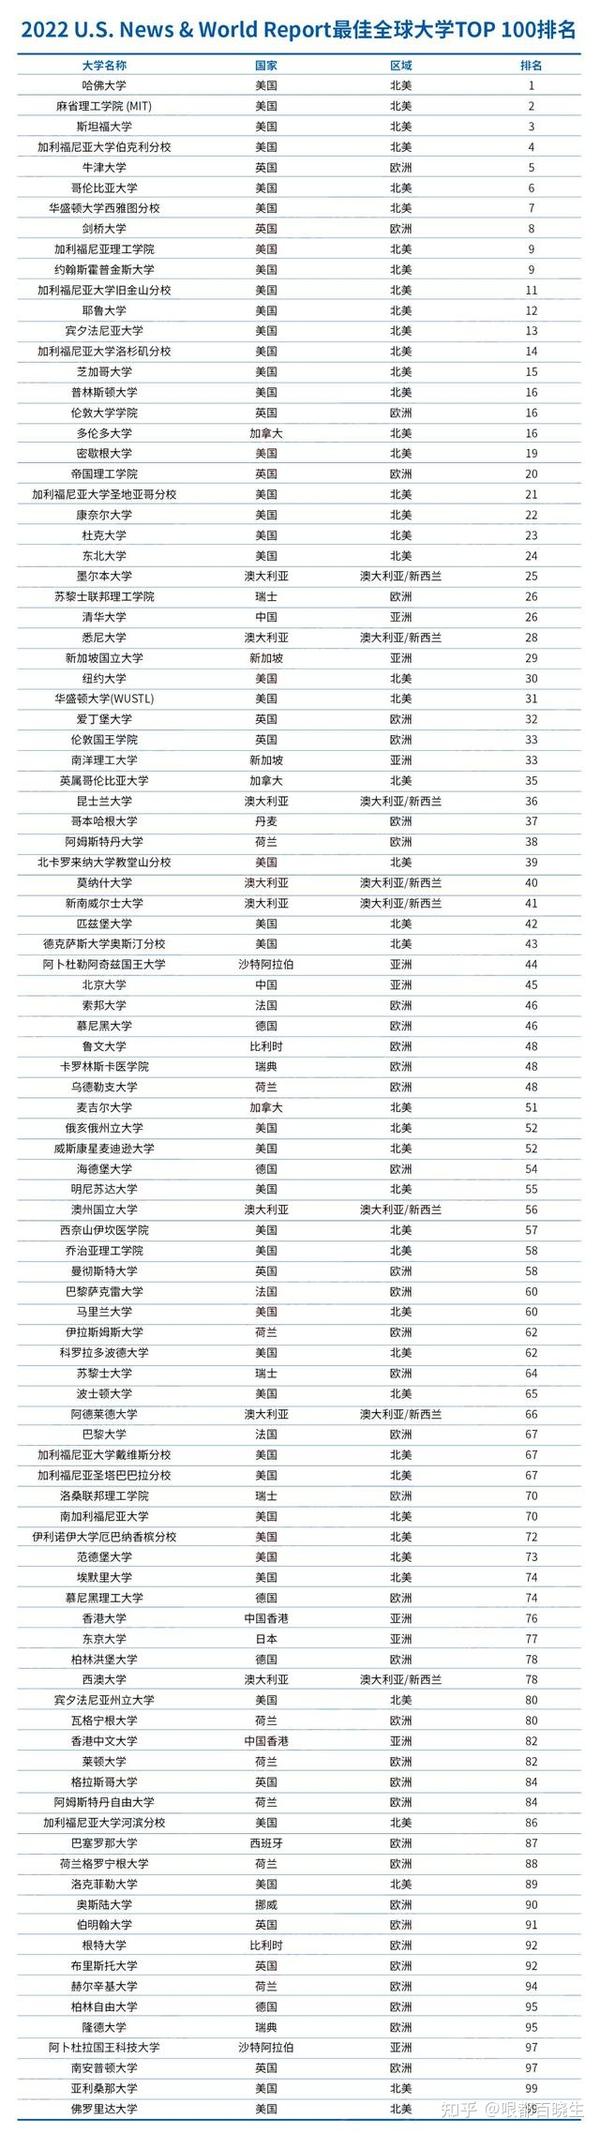 2022usnews世界大学排名发布啦4所中国高校进入top100